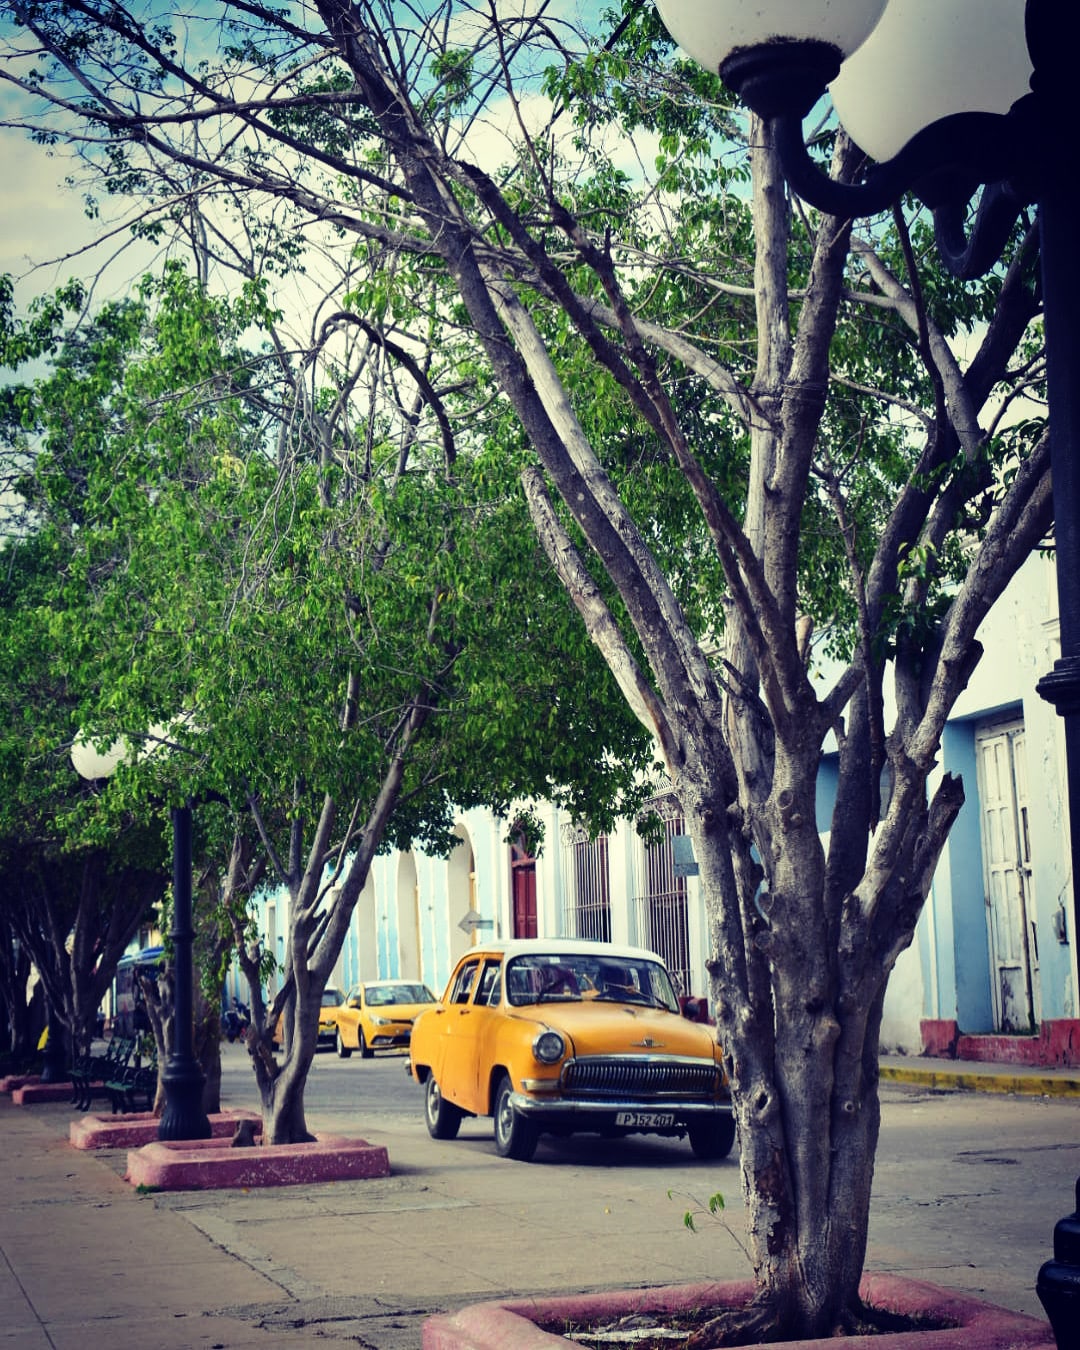 Cuba – Feels like home!